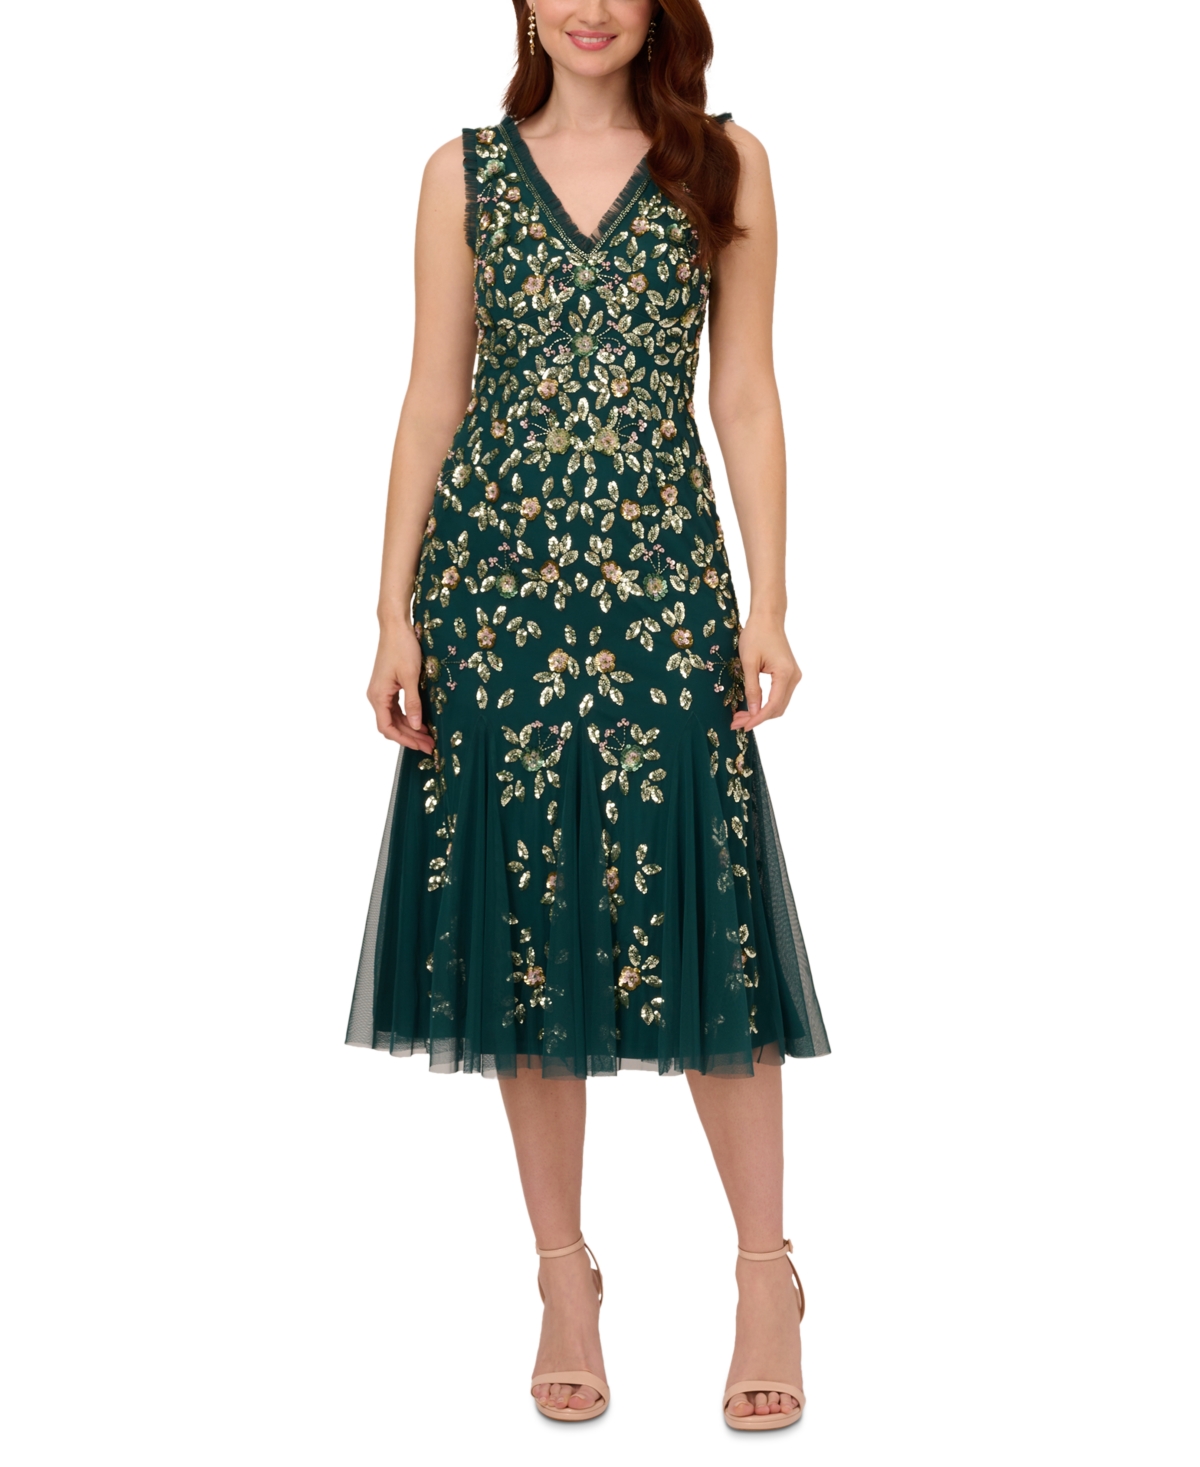 Buy Boardwalk Empire Inspired Dresses Adrianna Papell Womens Embellished Ruffled Godet Dress - Gem Green $299.00 AT vintagedancer.com